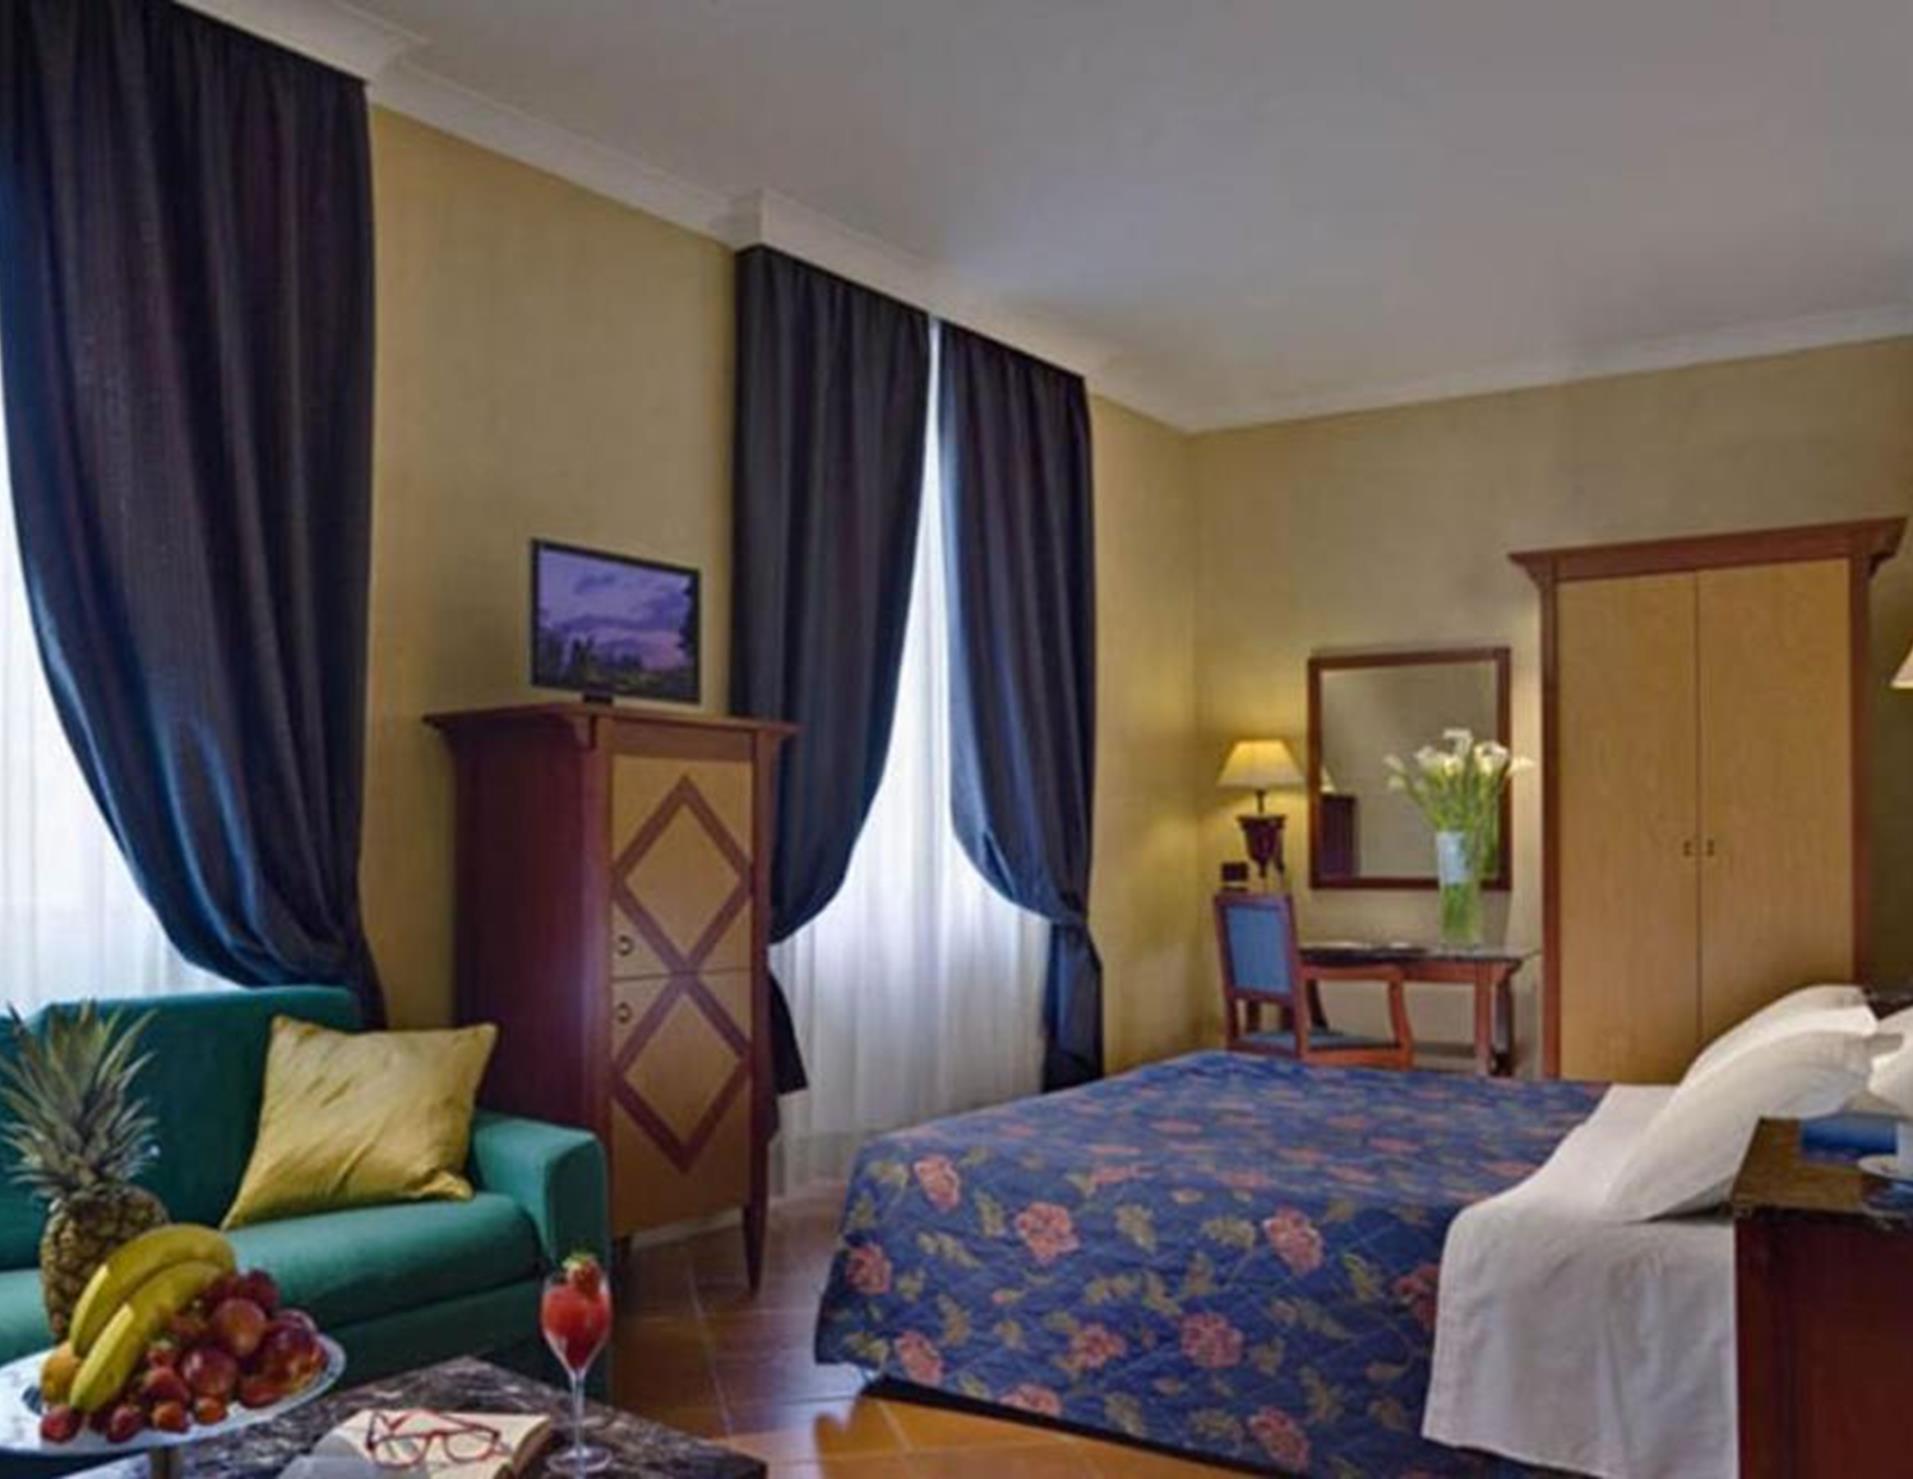 Hotel Corona d'Italia - Room 4